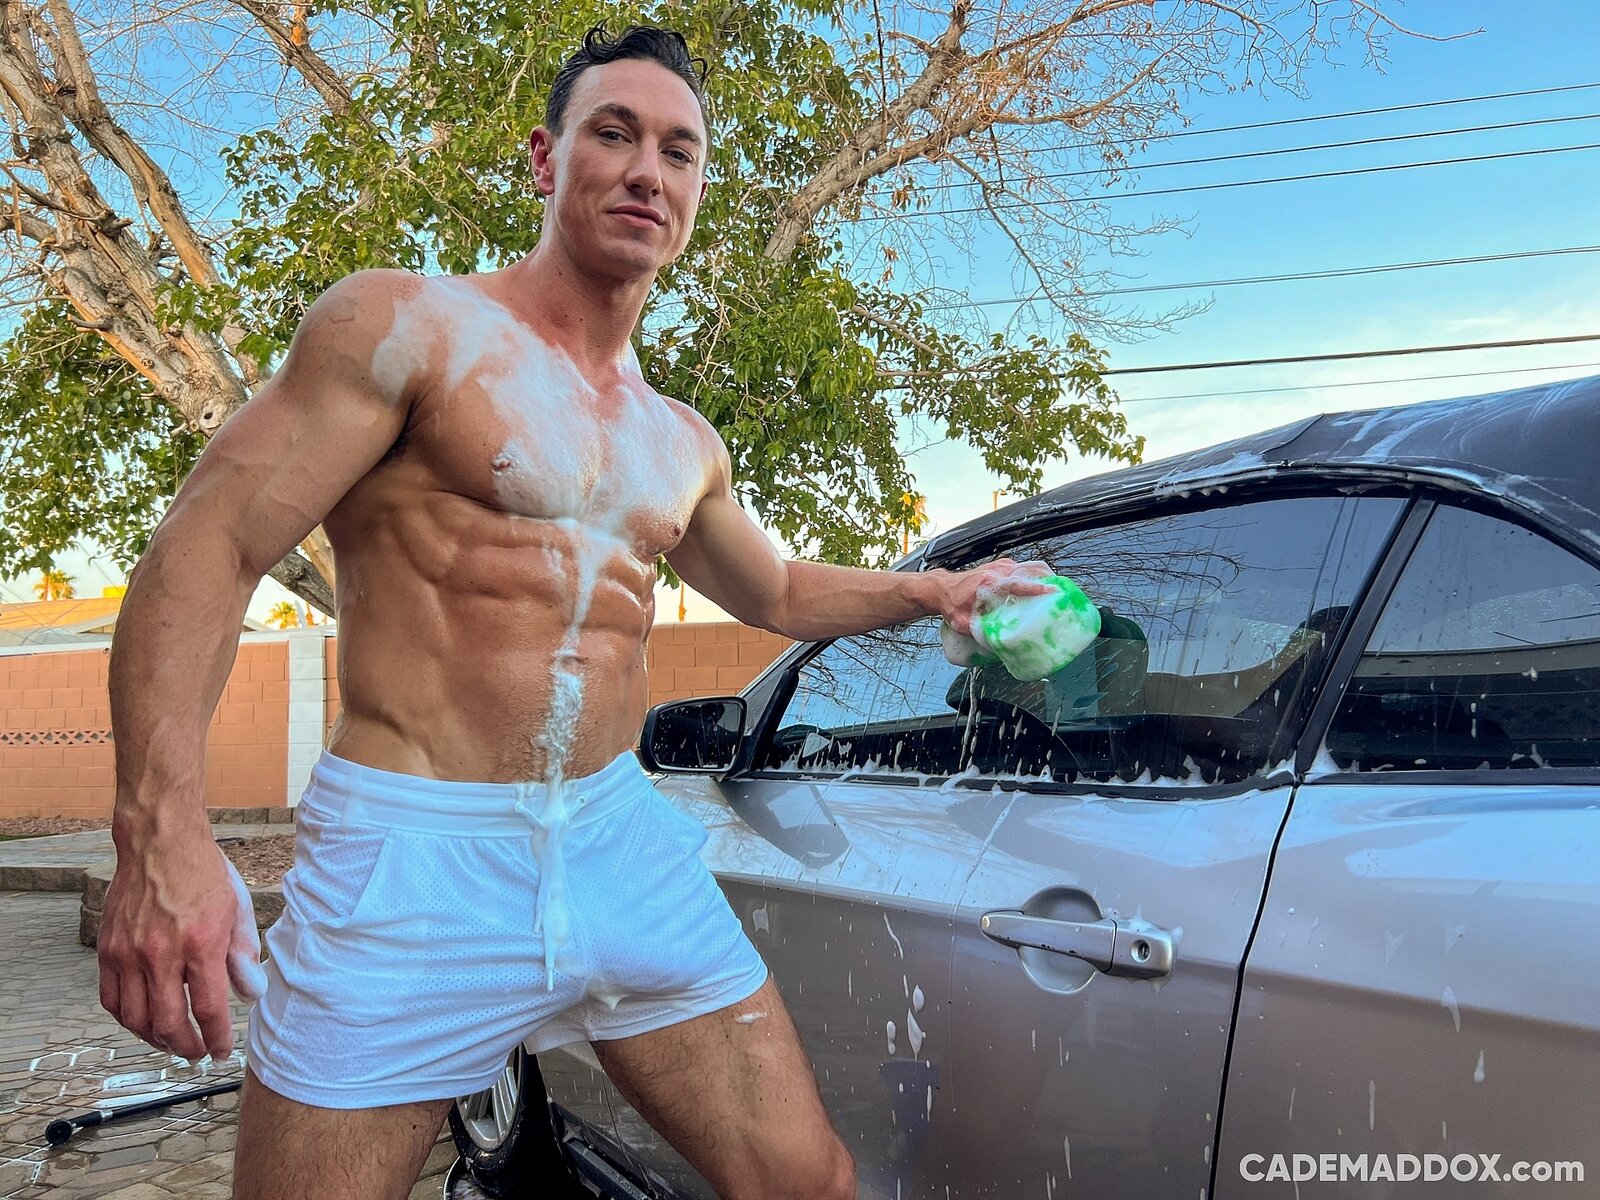 anukul chandra recommends Naked Men Car Wash